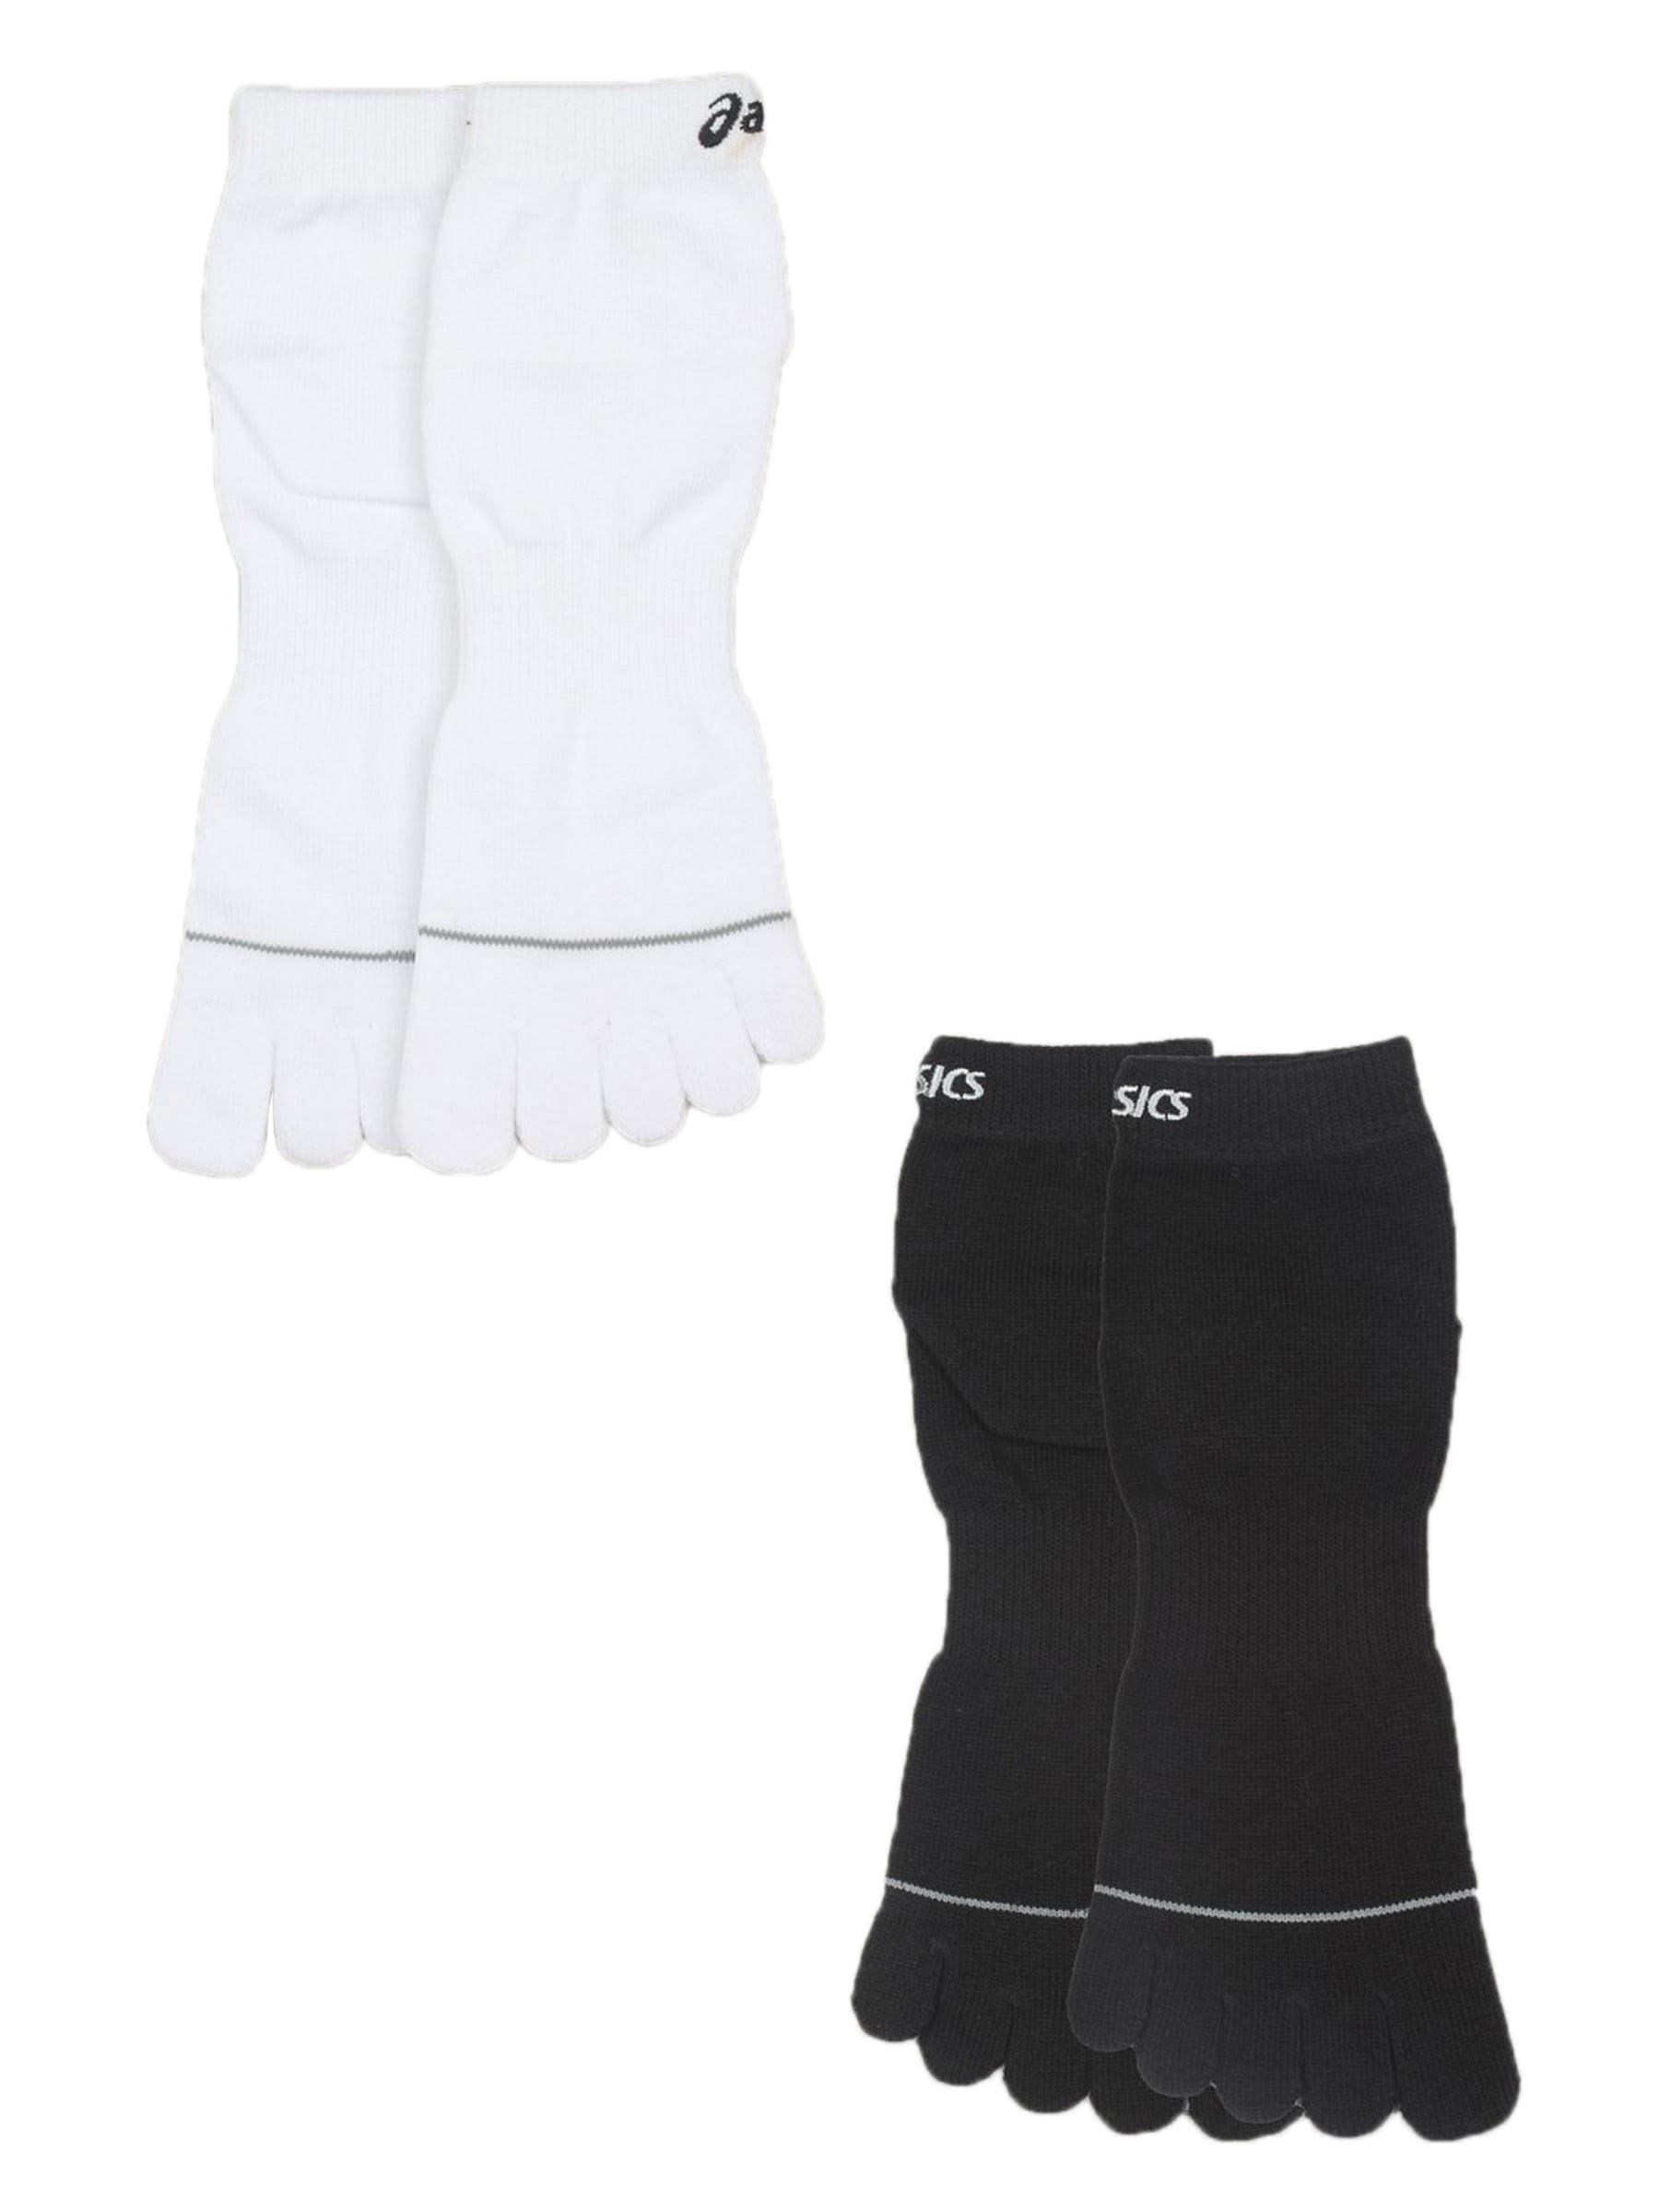 Asics Unisex 2 Pairs 5 Toes SVS White Black Socks